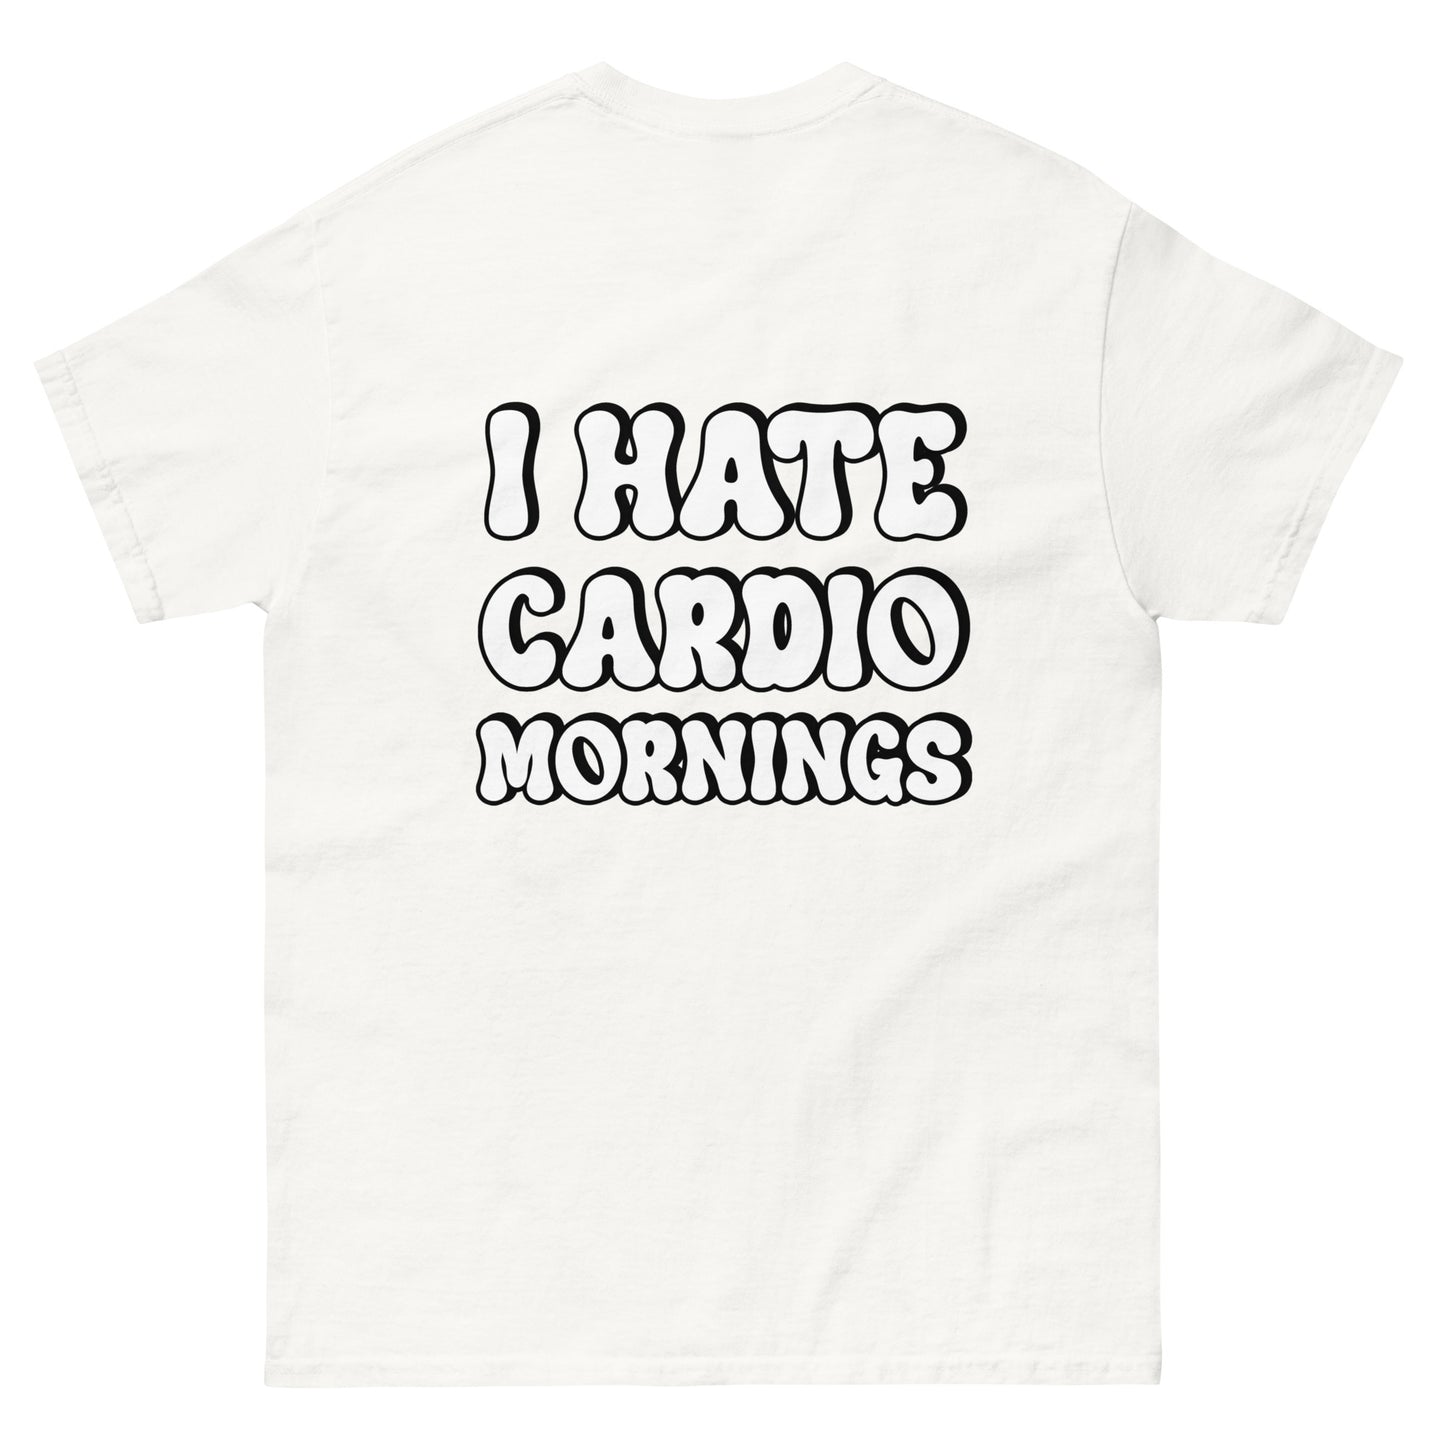 "Cardio mornings" - Classic T-Shirt